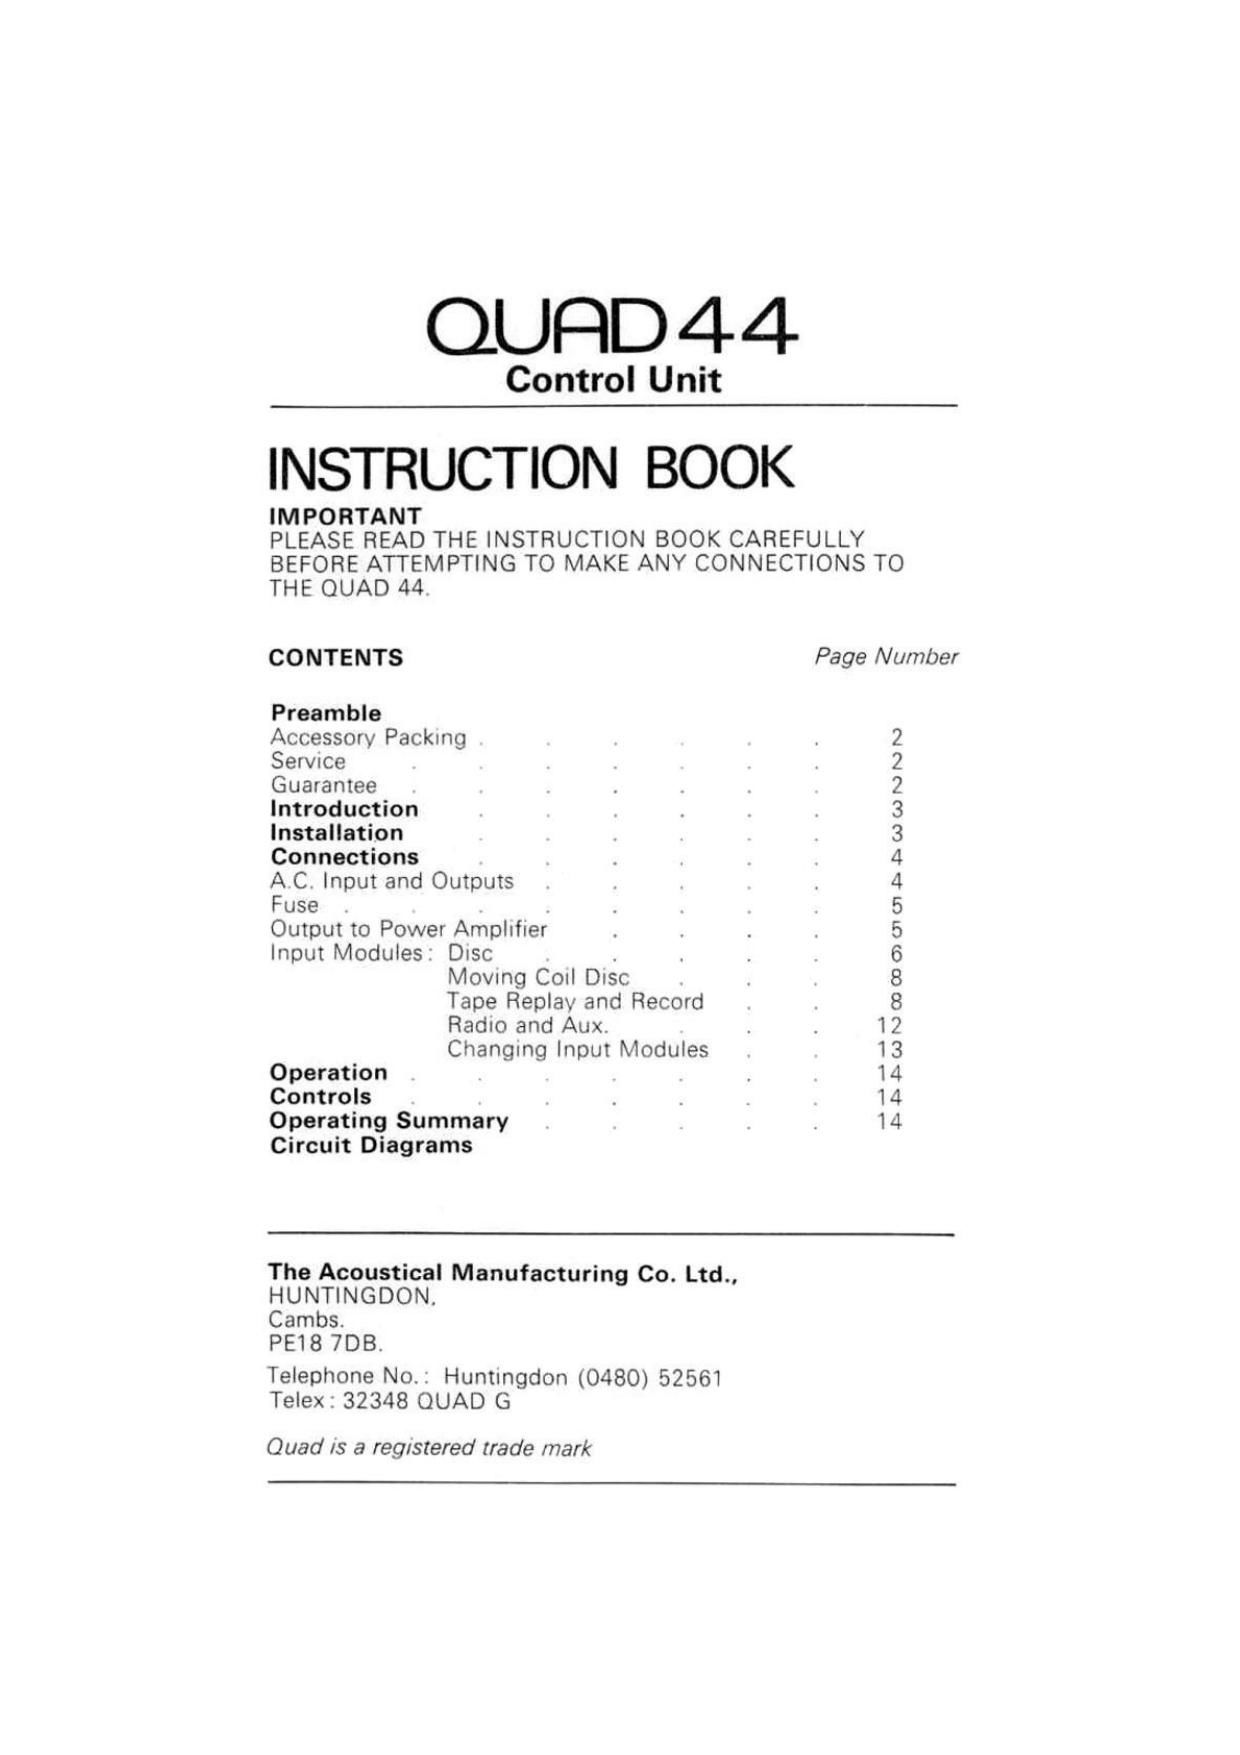 Quad 44 Service Manual 2